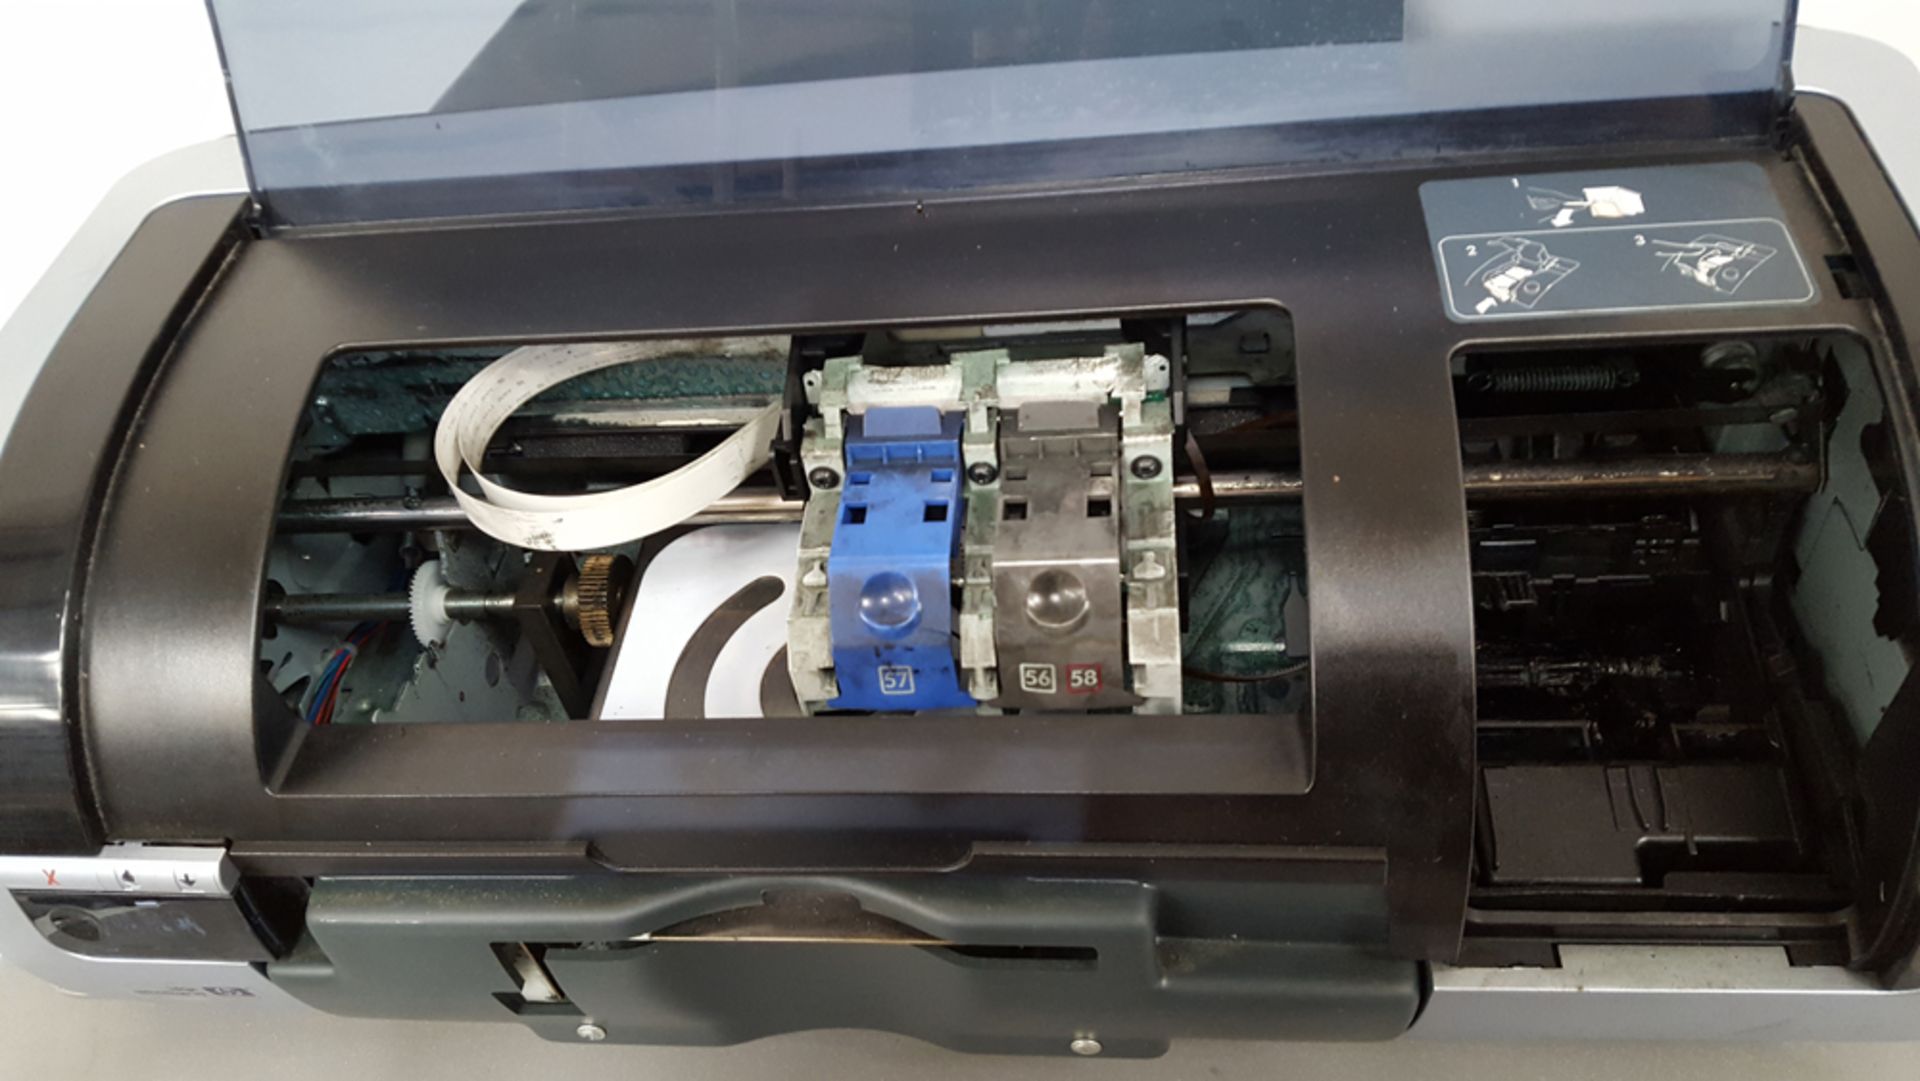 CopyDisc label printer and robotic arm x 2 (Ref: WA11784) - Image 5 of 10